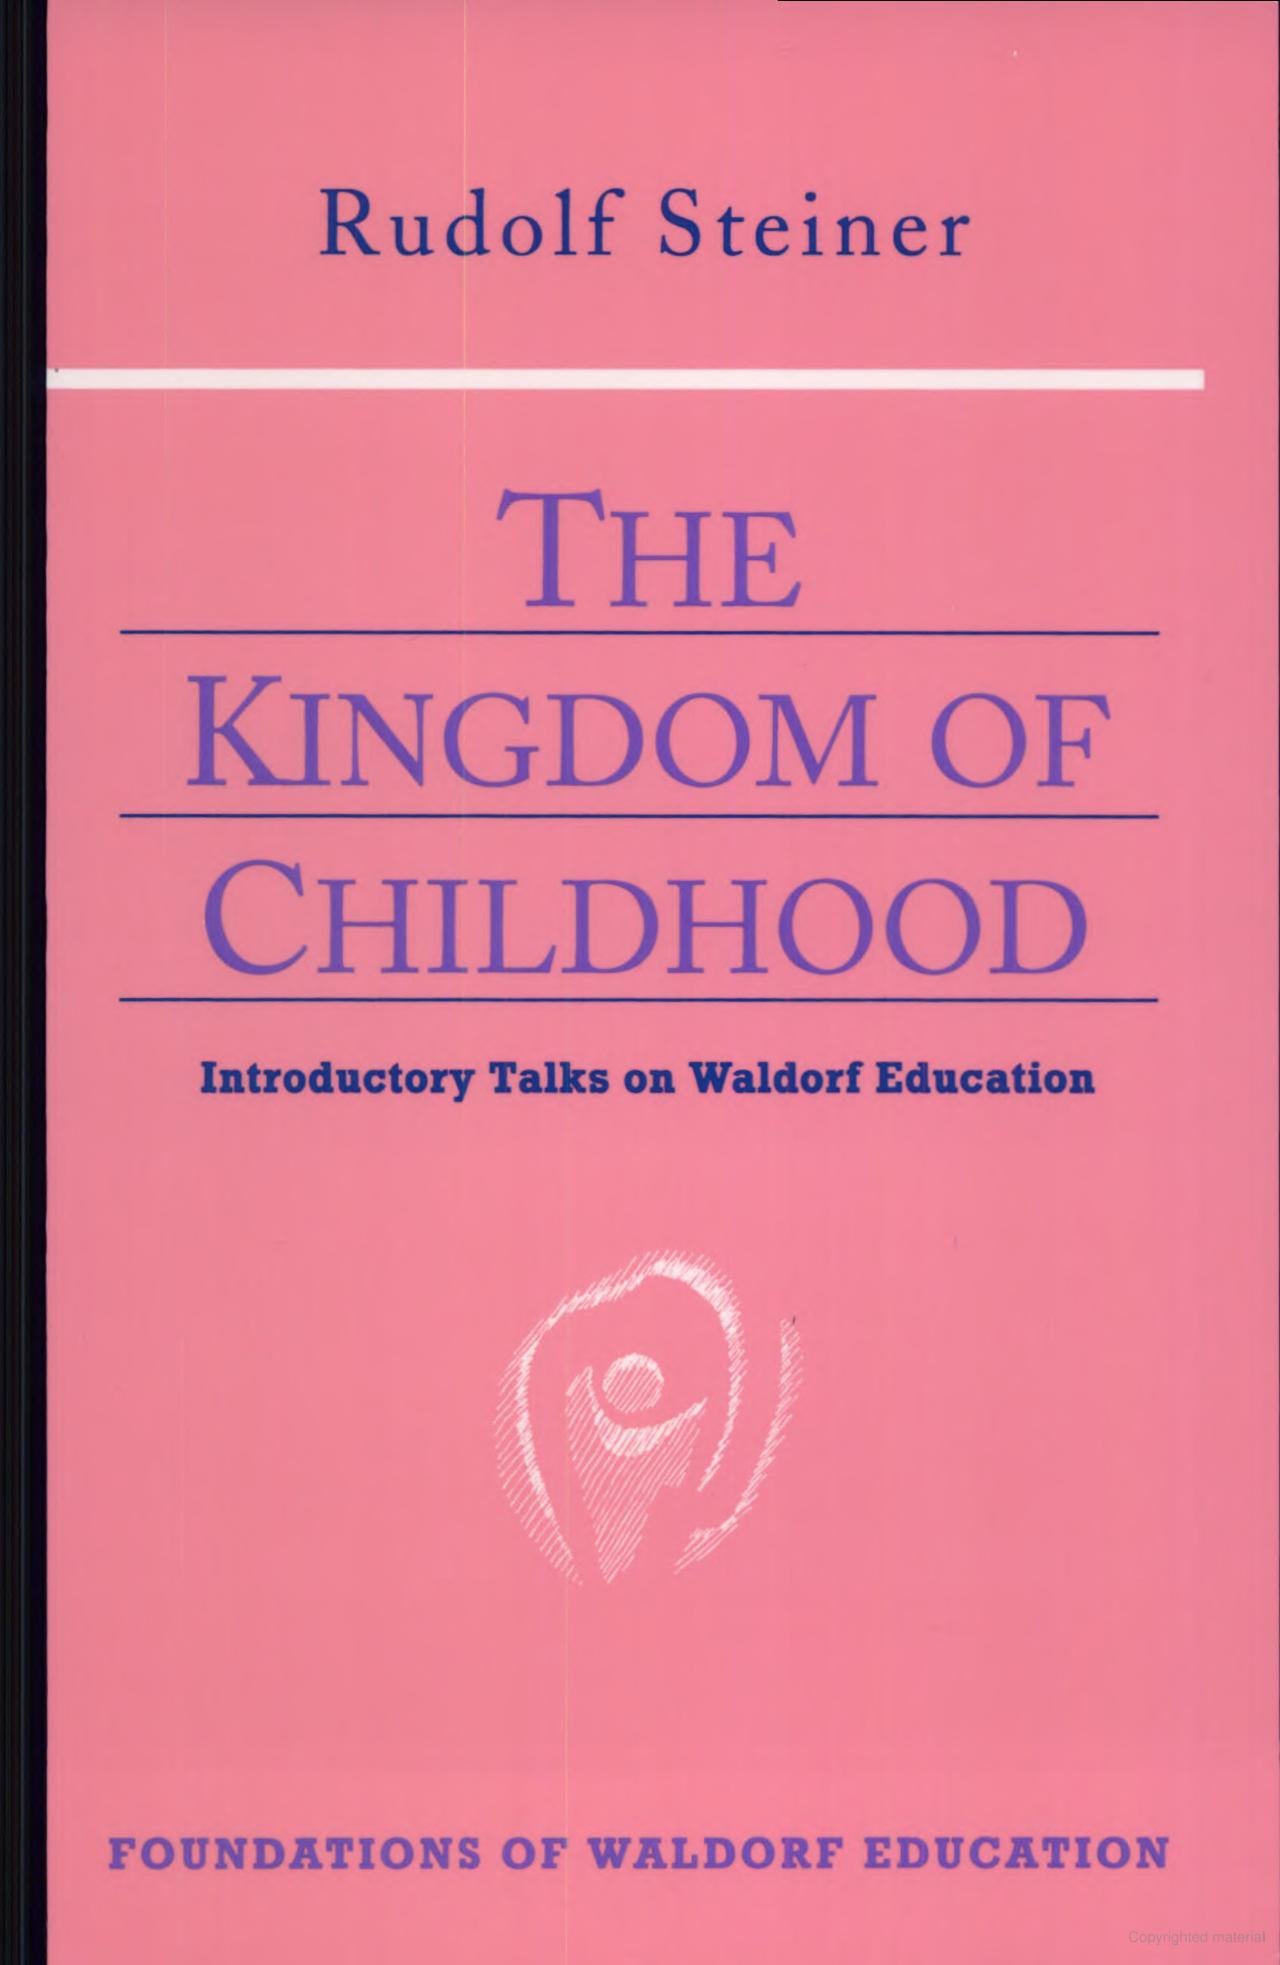 The Kingdom of Childhood - Introductory Talks on Waldorf Education